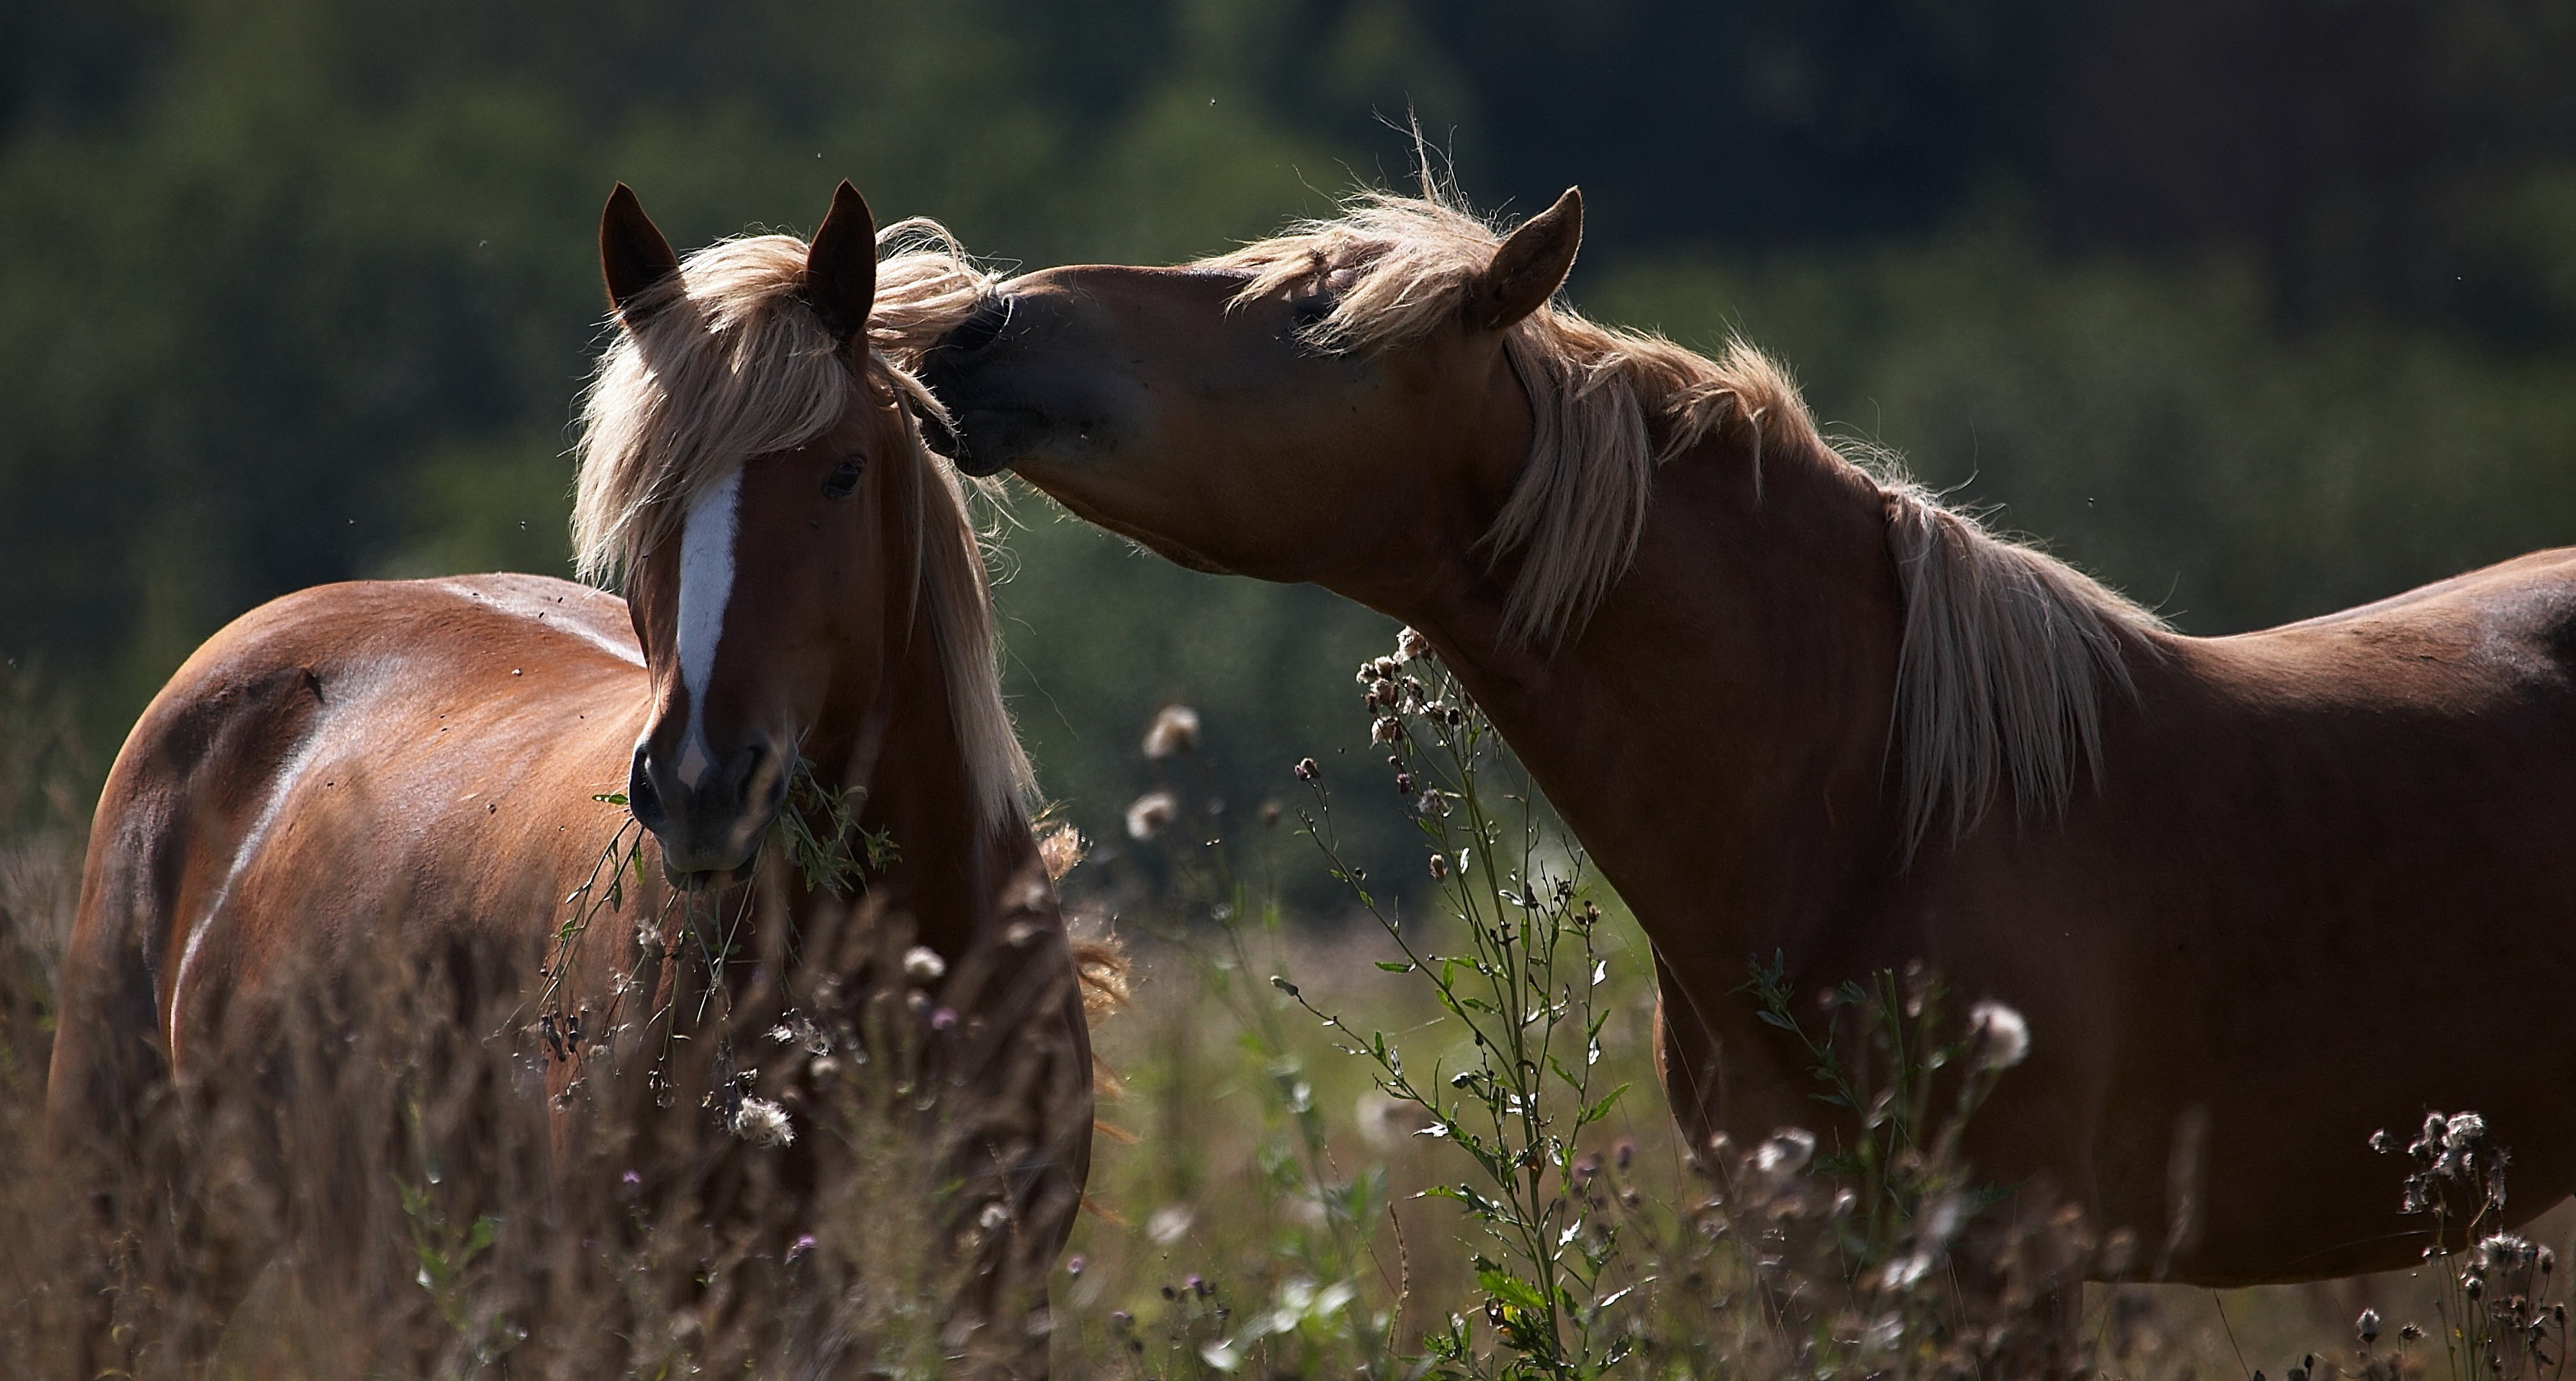 Картинки лошадей на заставку. Обои лошади. Пара лошадей. Красивые лошади. Красивые лошади на природе.